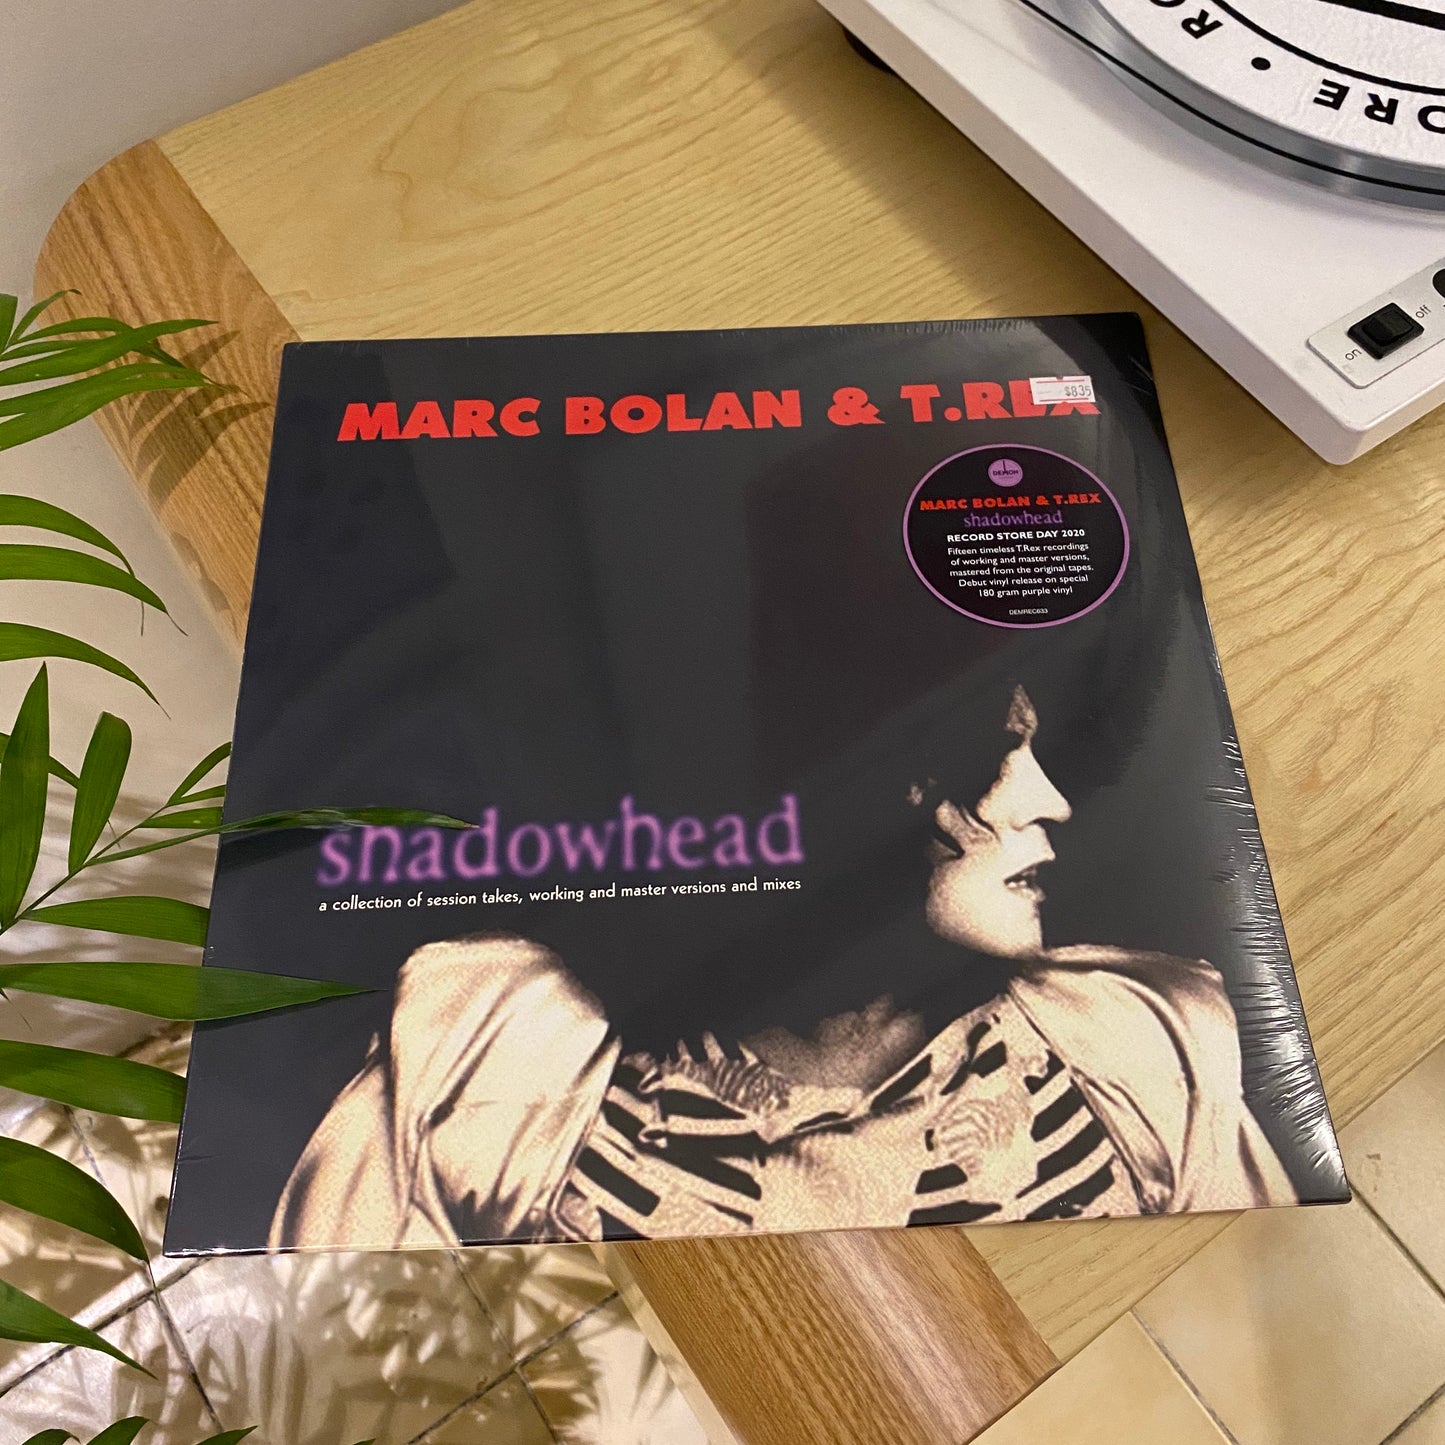 Marc Bolan & T. Rex - Shadowhead (RSD 2020, purple vinyl)